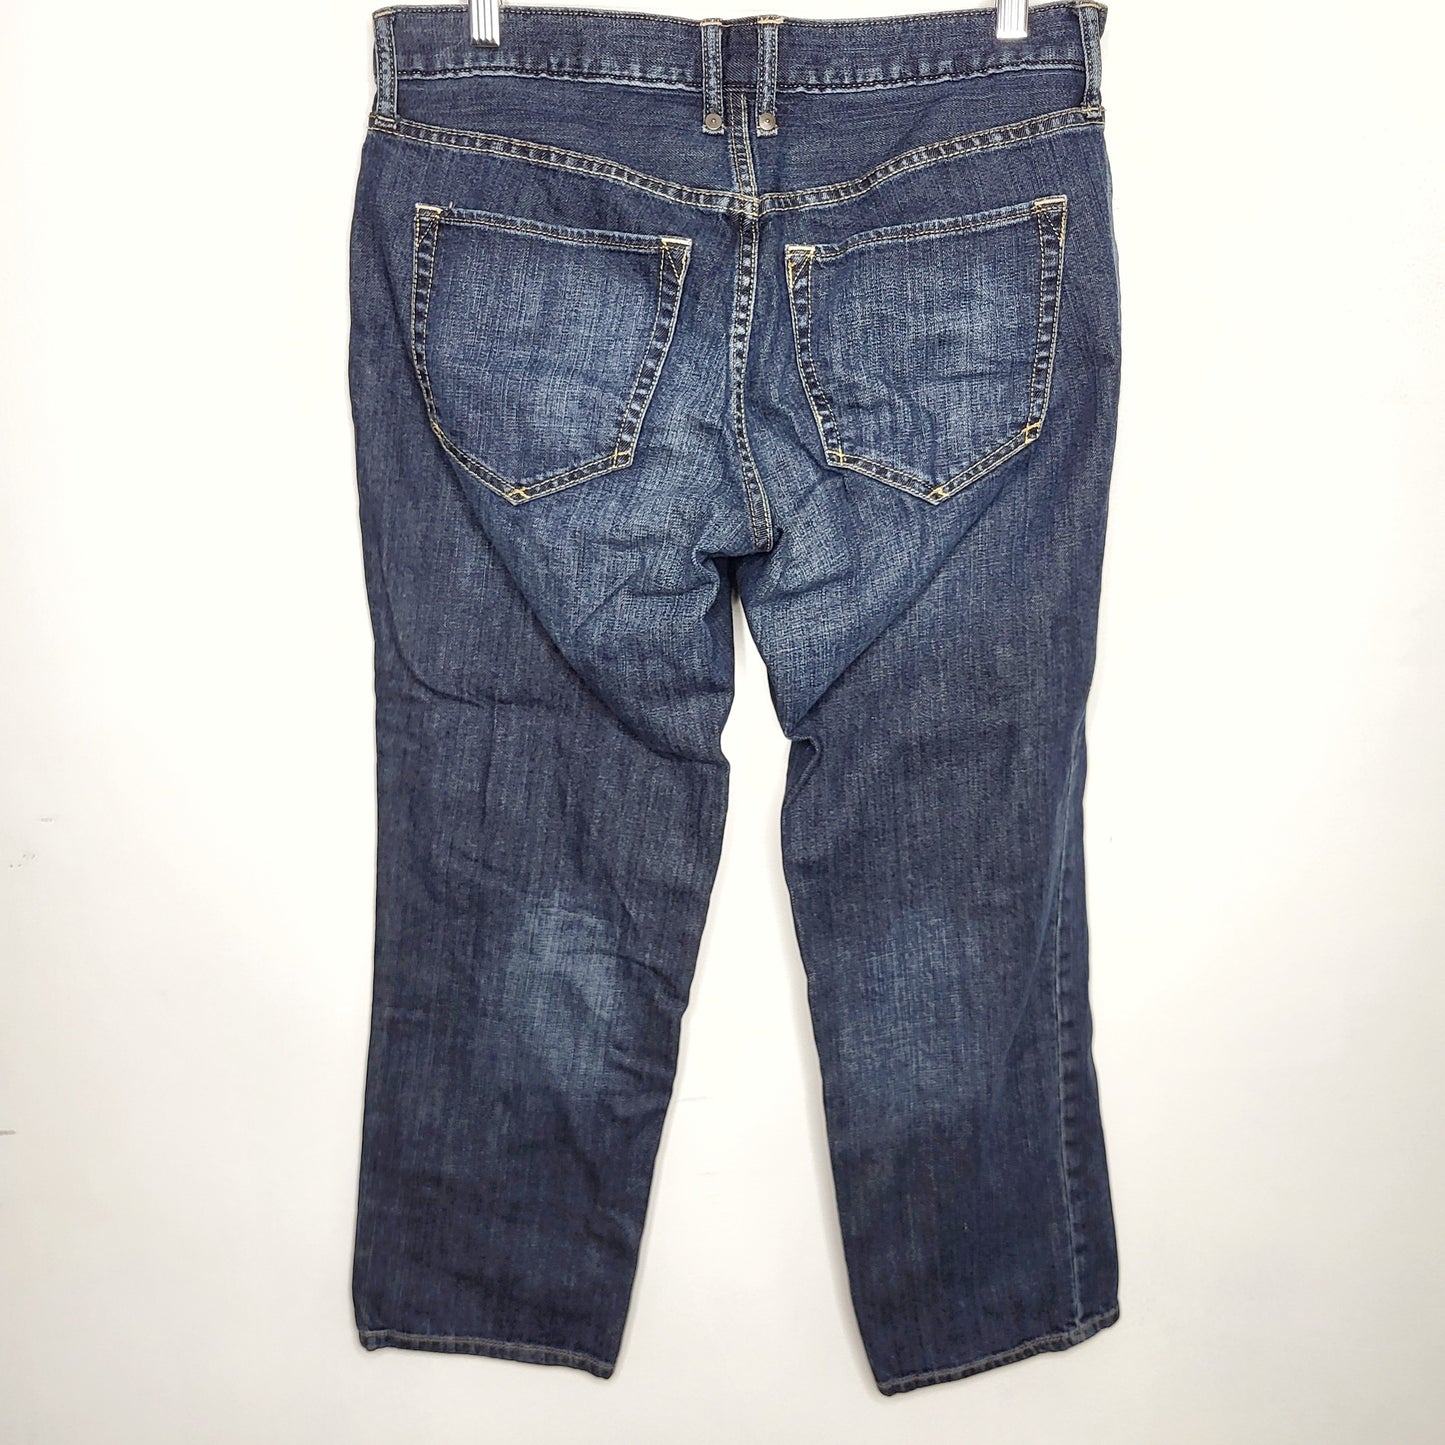 JBAB2 - Eddie Bauer cropped boyfriend jeans, size 6 (measure like a large), good condition